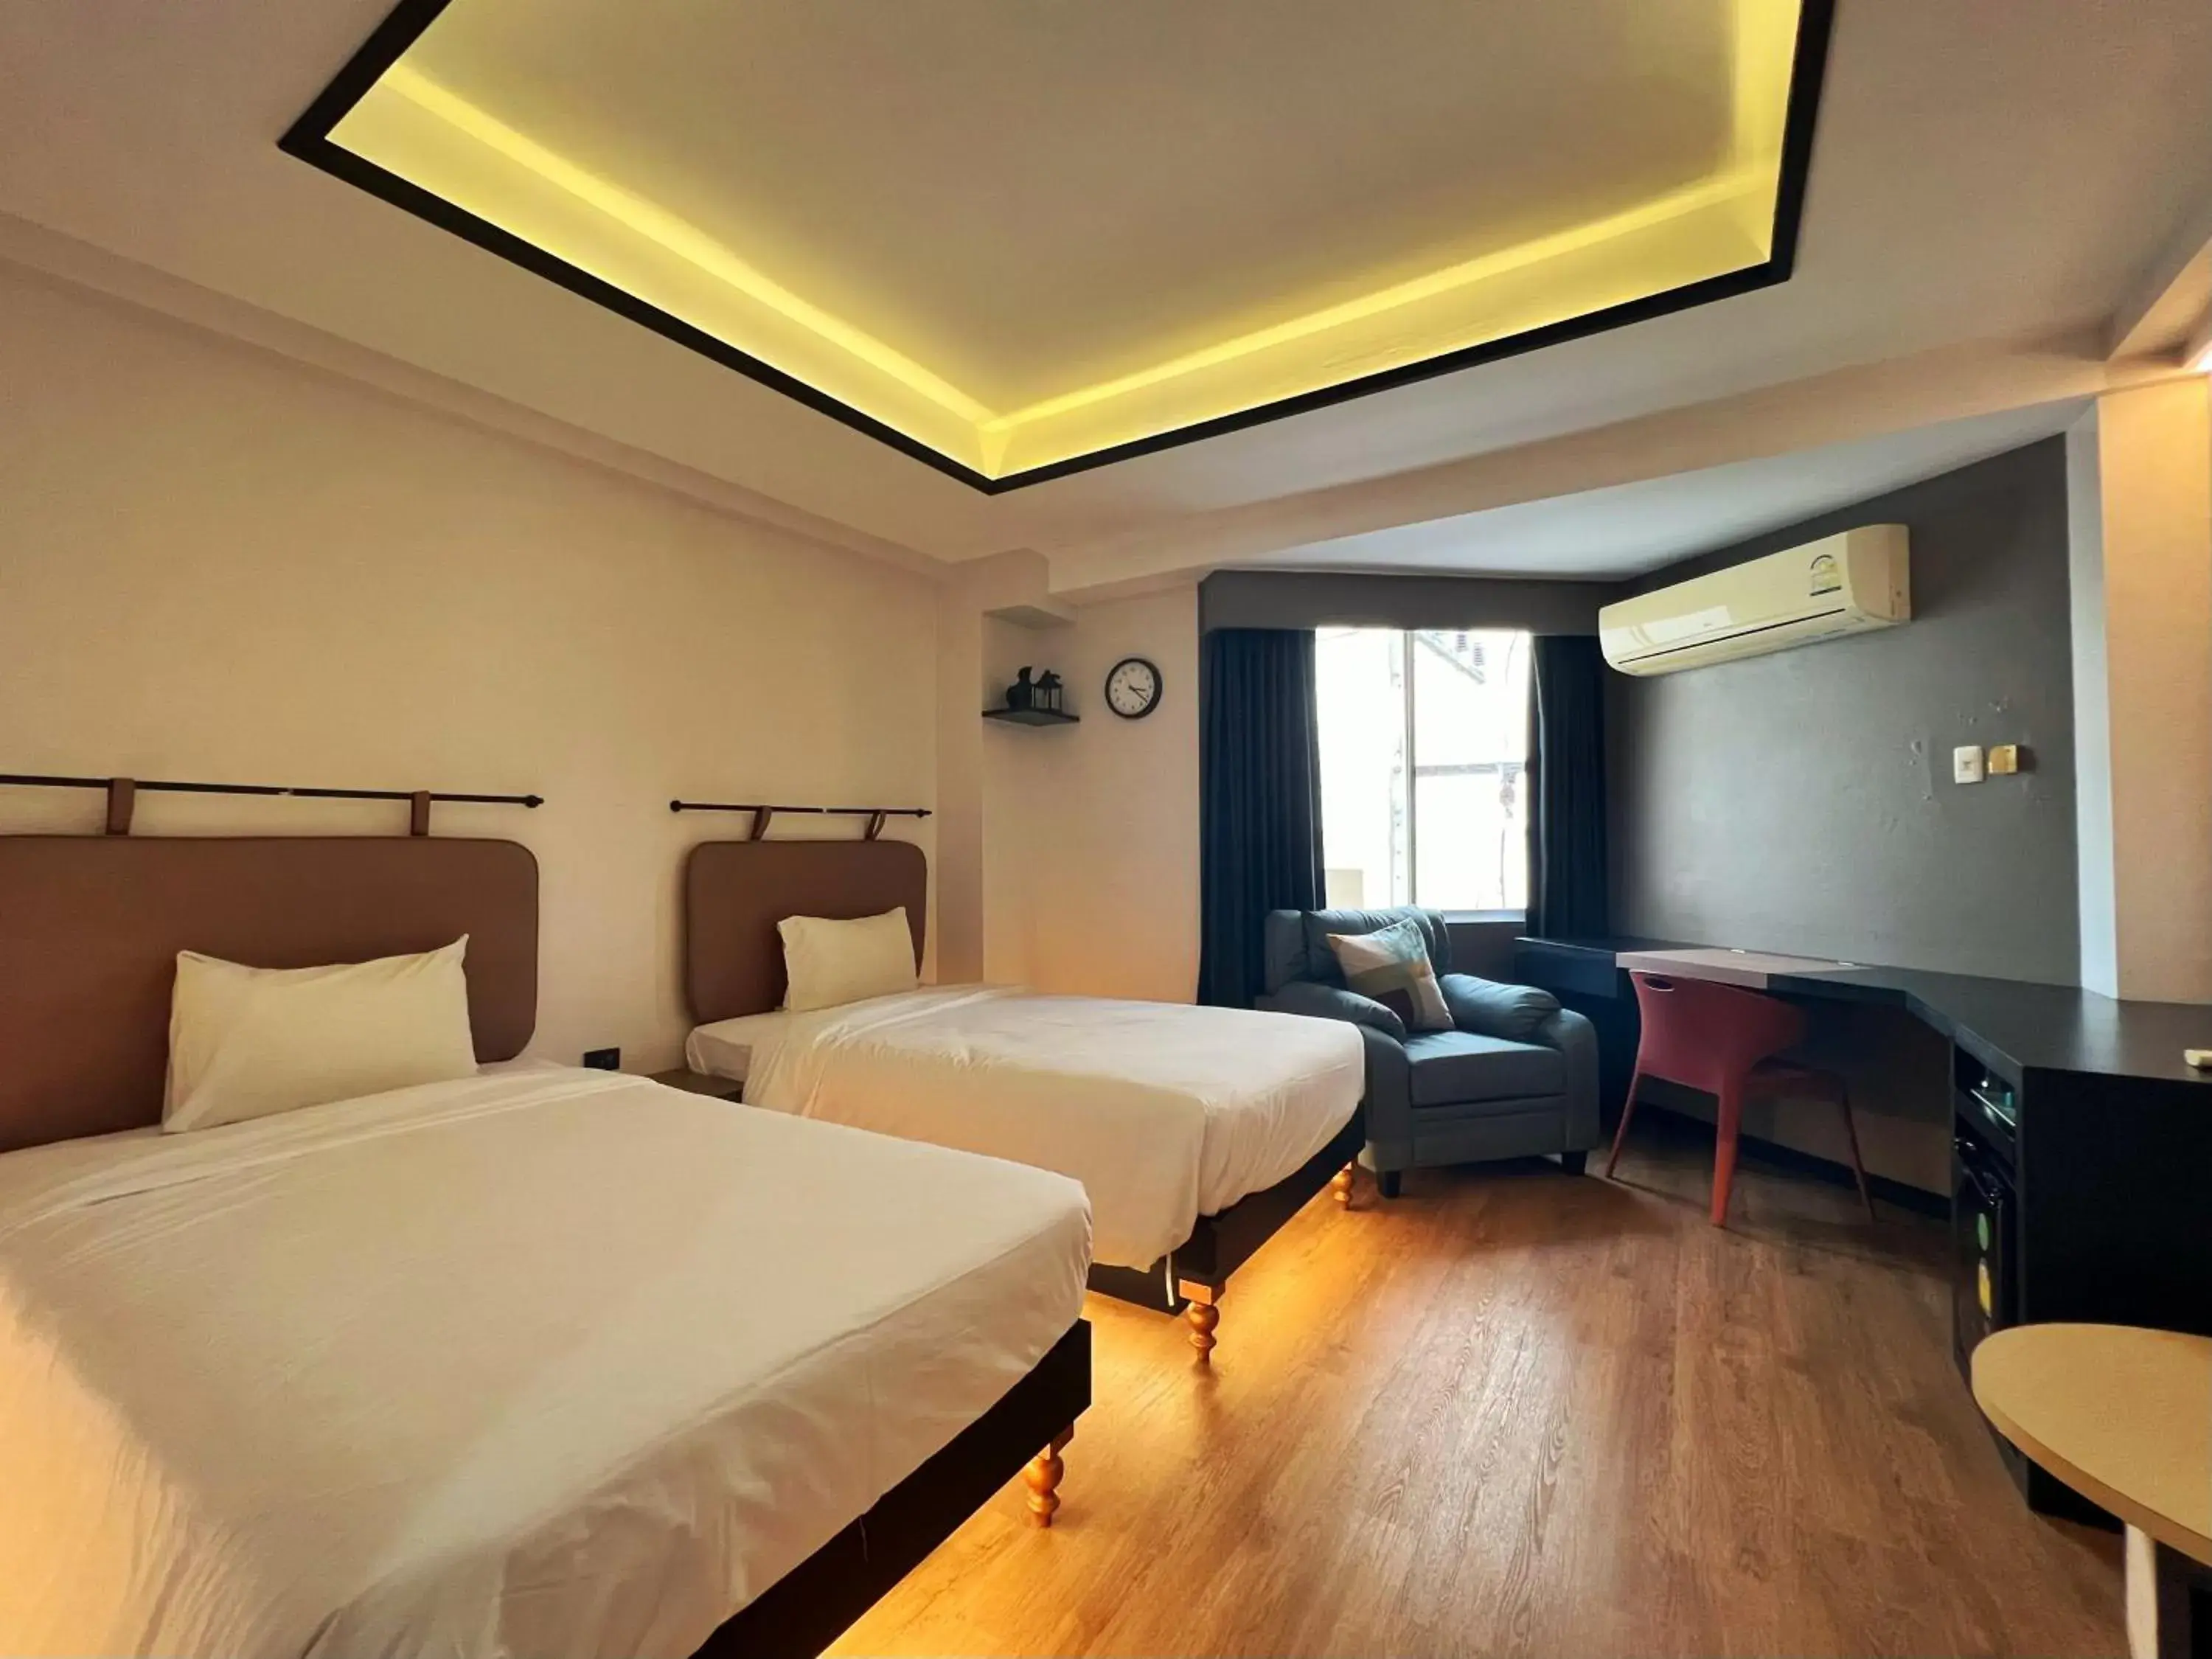 Bedroom in Prs Hotel